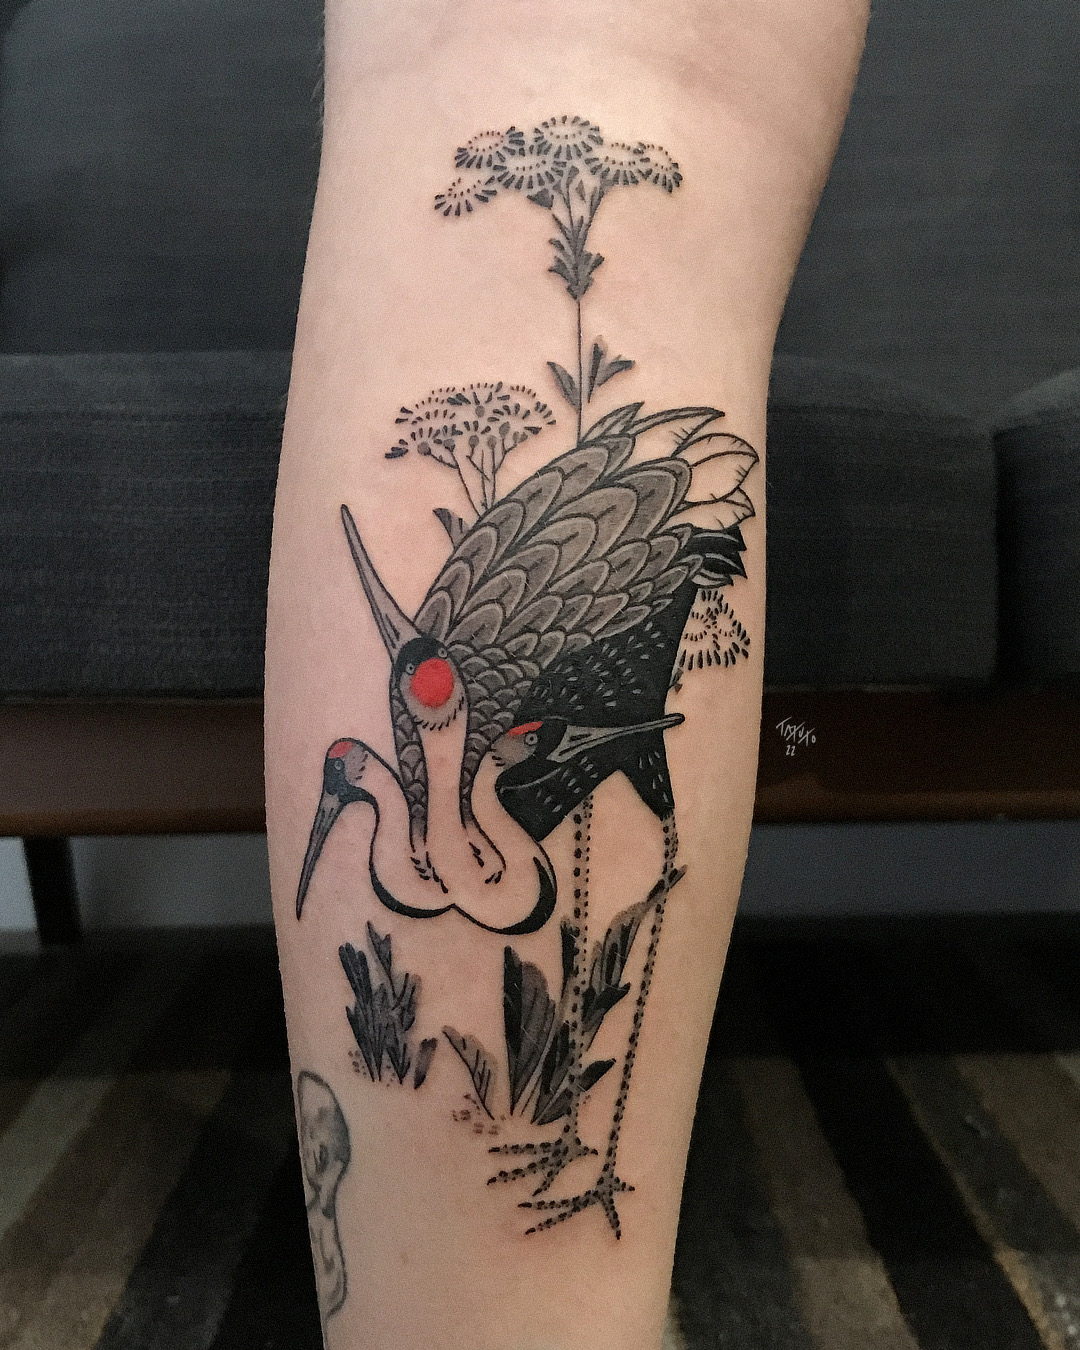 nico-tatuto-tattoo-bordeaux-flash-bastide-tatoueur-grue-crane-japonais-japanese-black-fineline-floral-botanical-meilleur